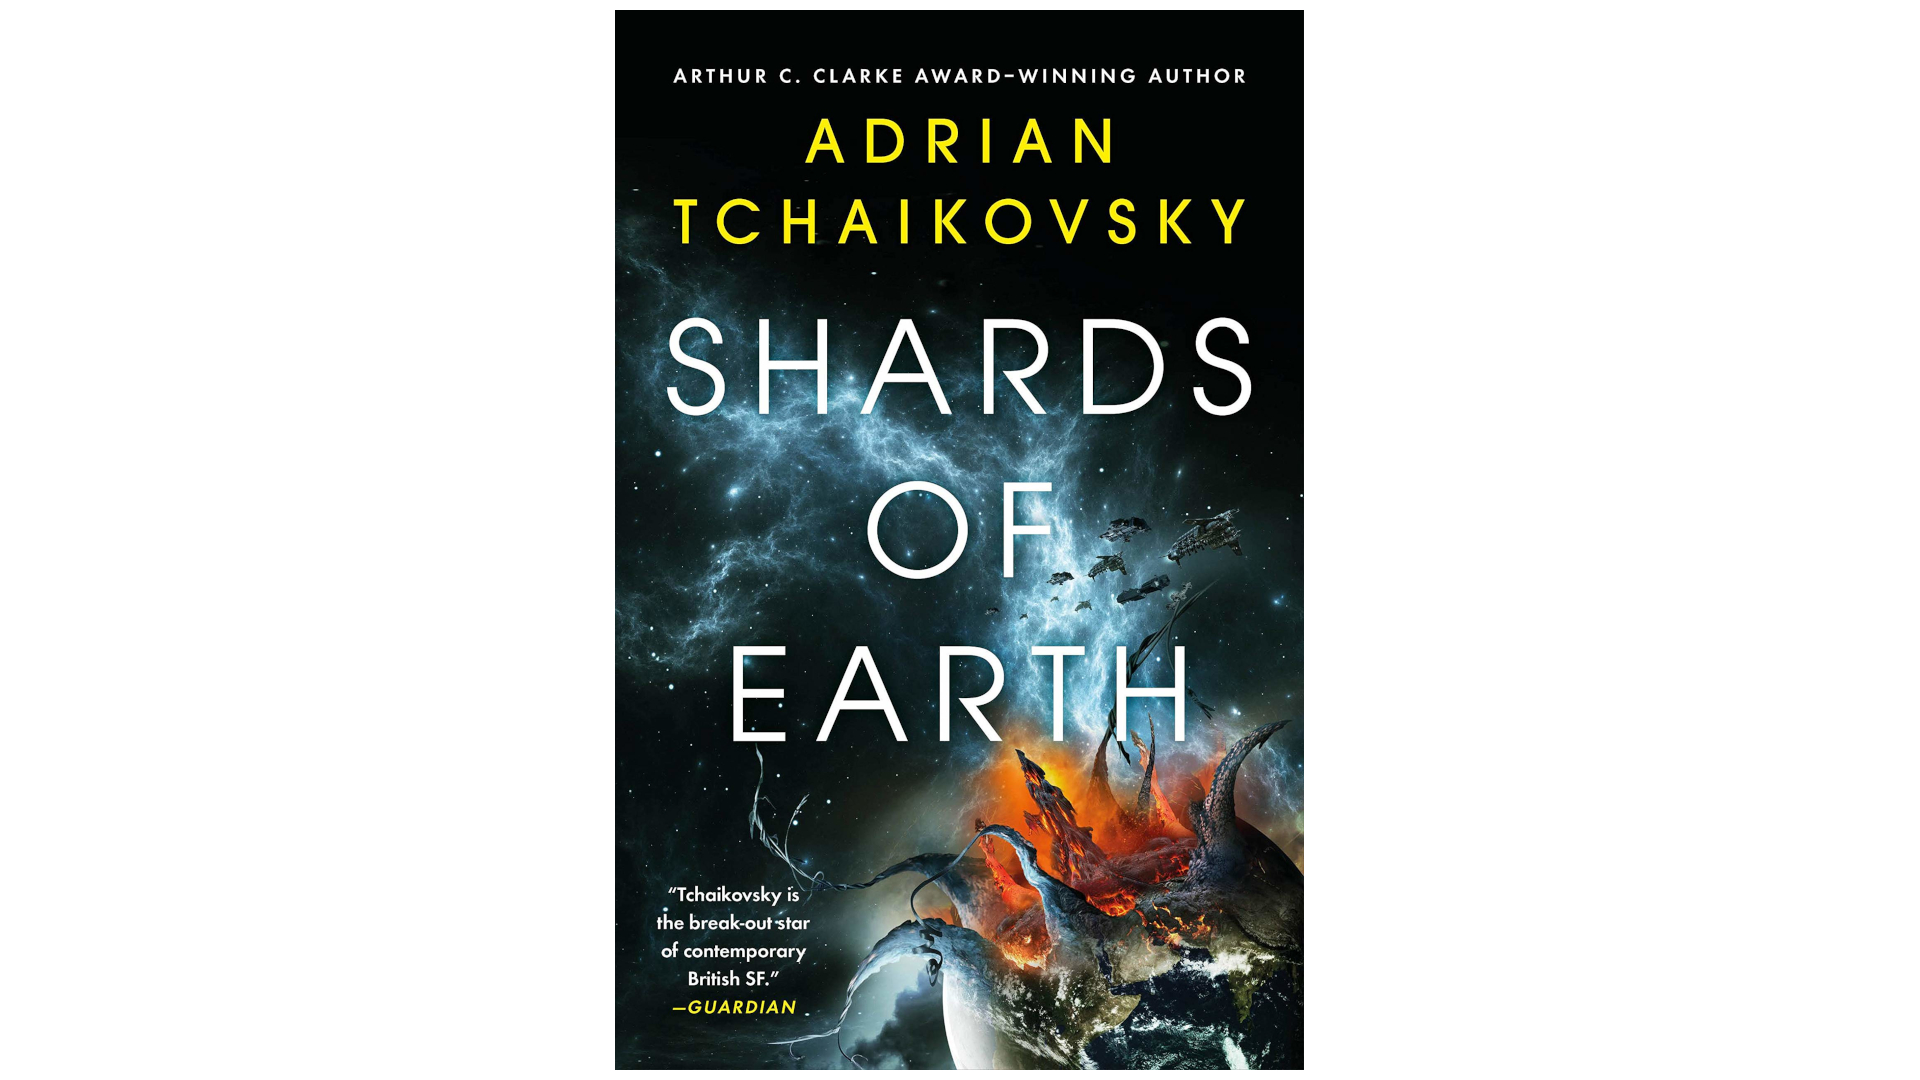 “Shards of Earth” by Adrian Tchaikovsky (Orbit, 2021)